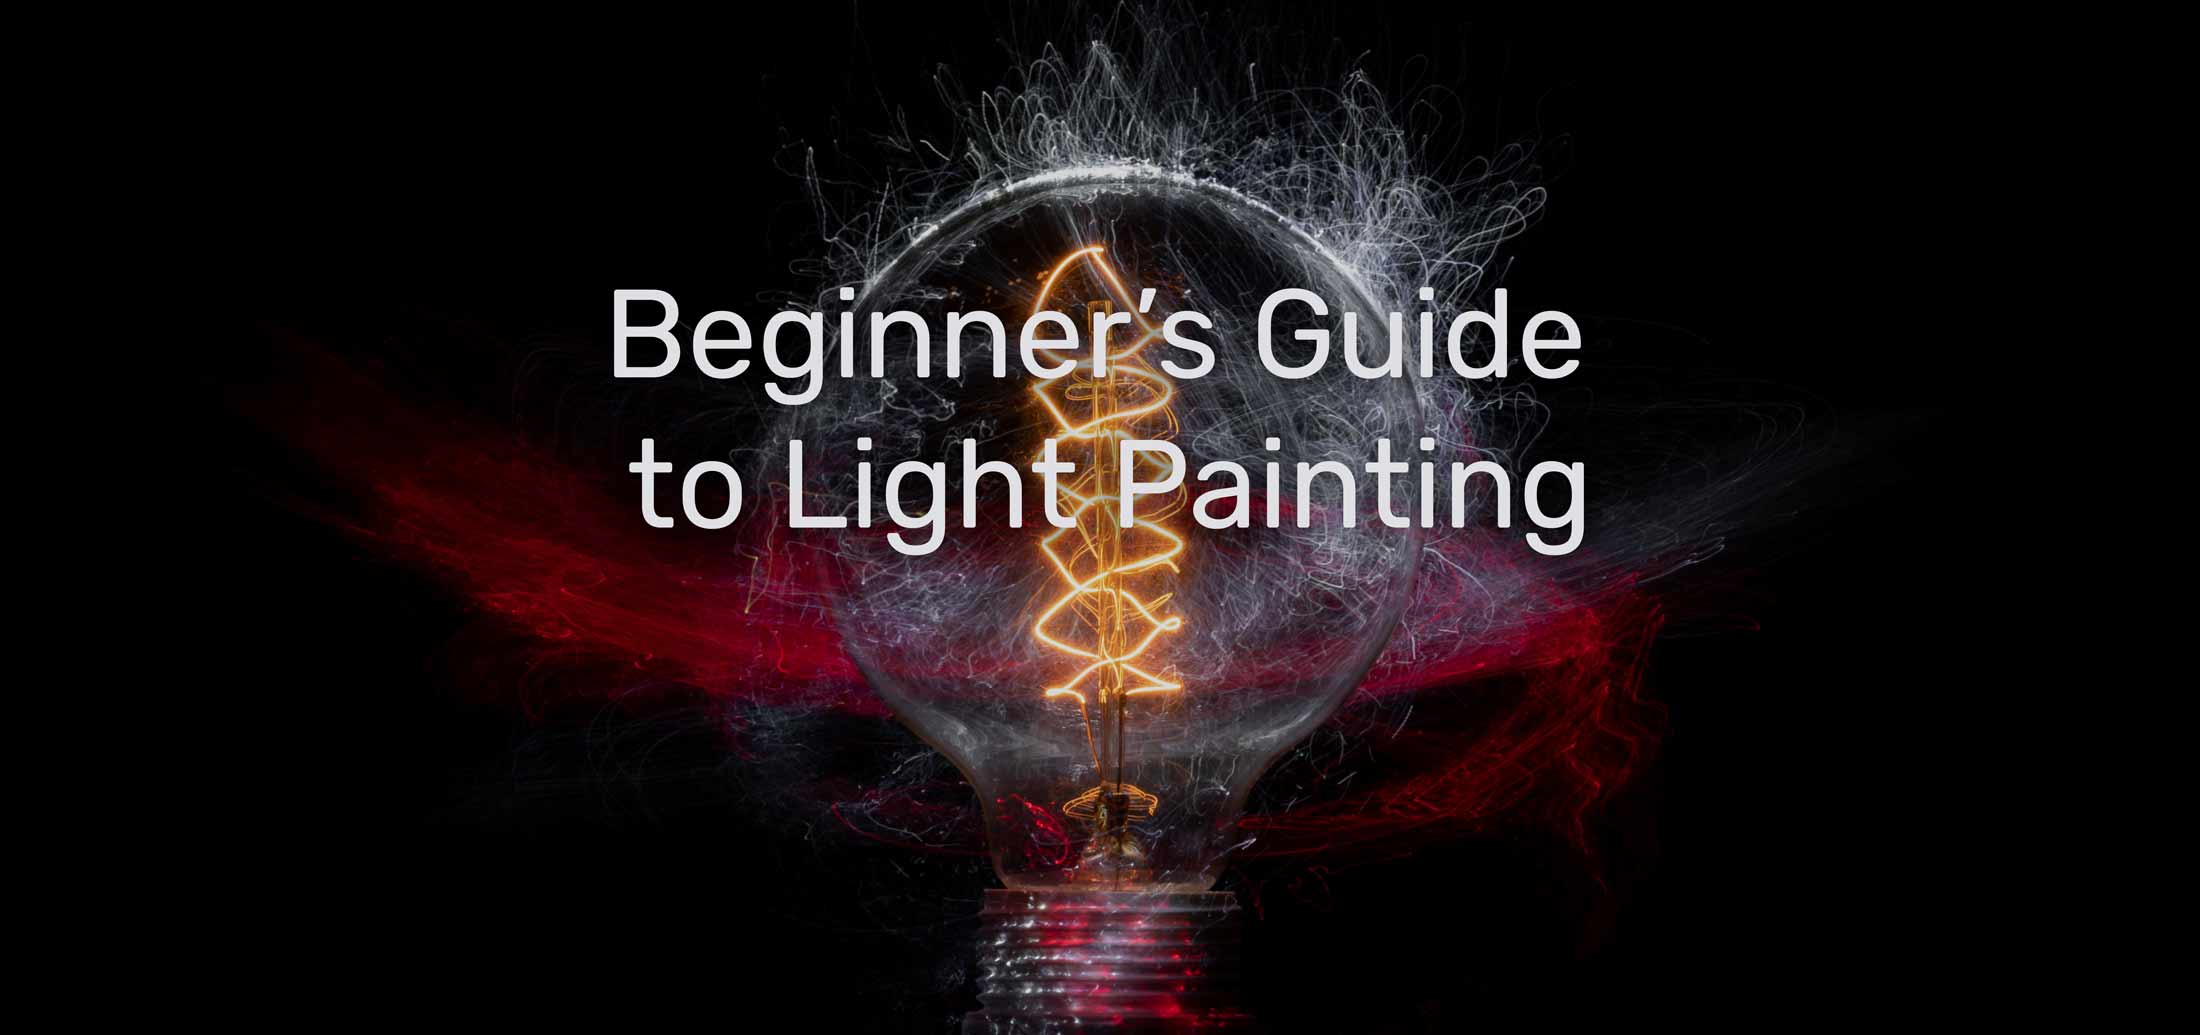 Beginners Guide to Light Painting by Gunnar Heilmann